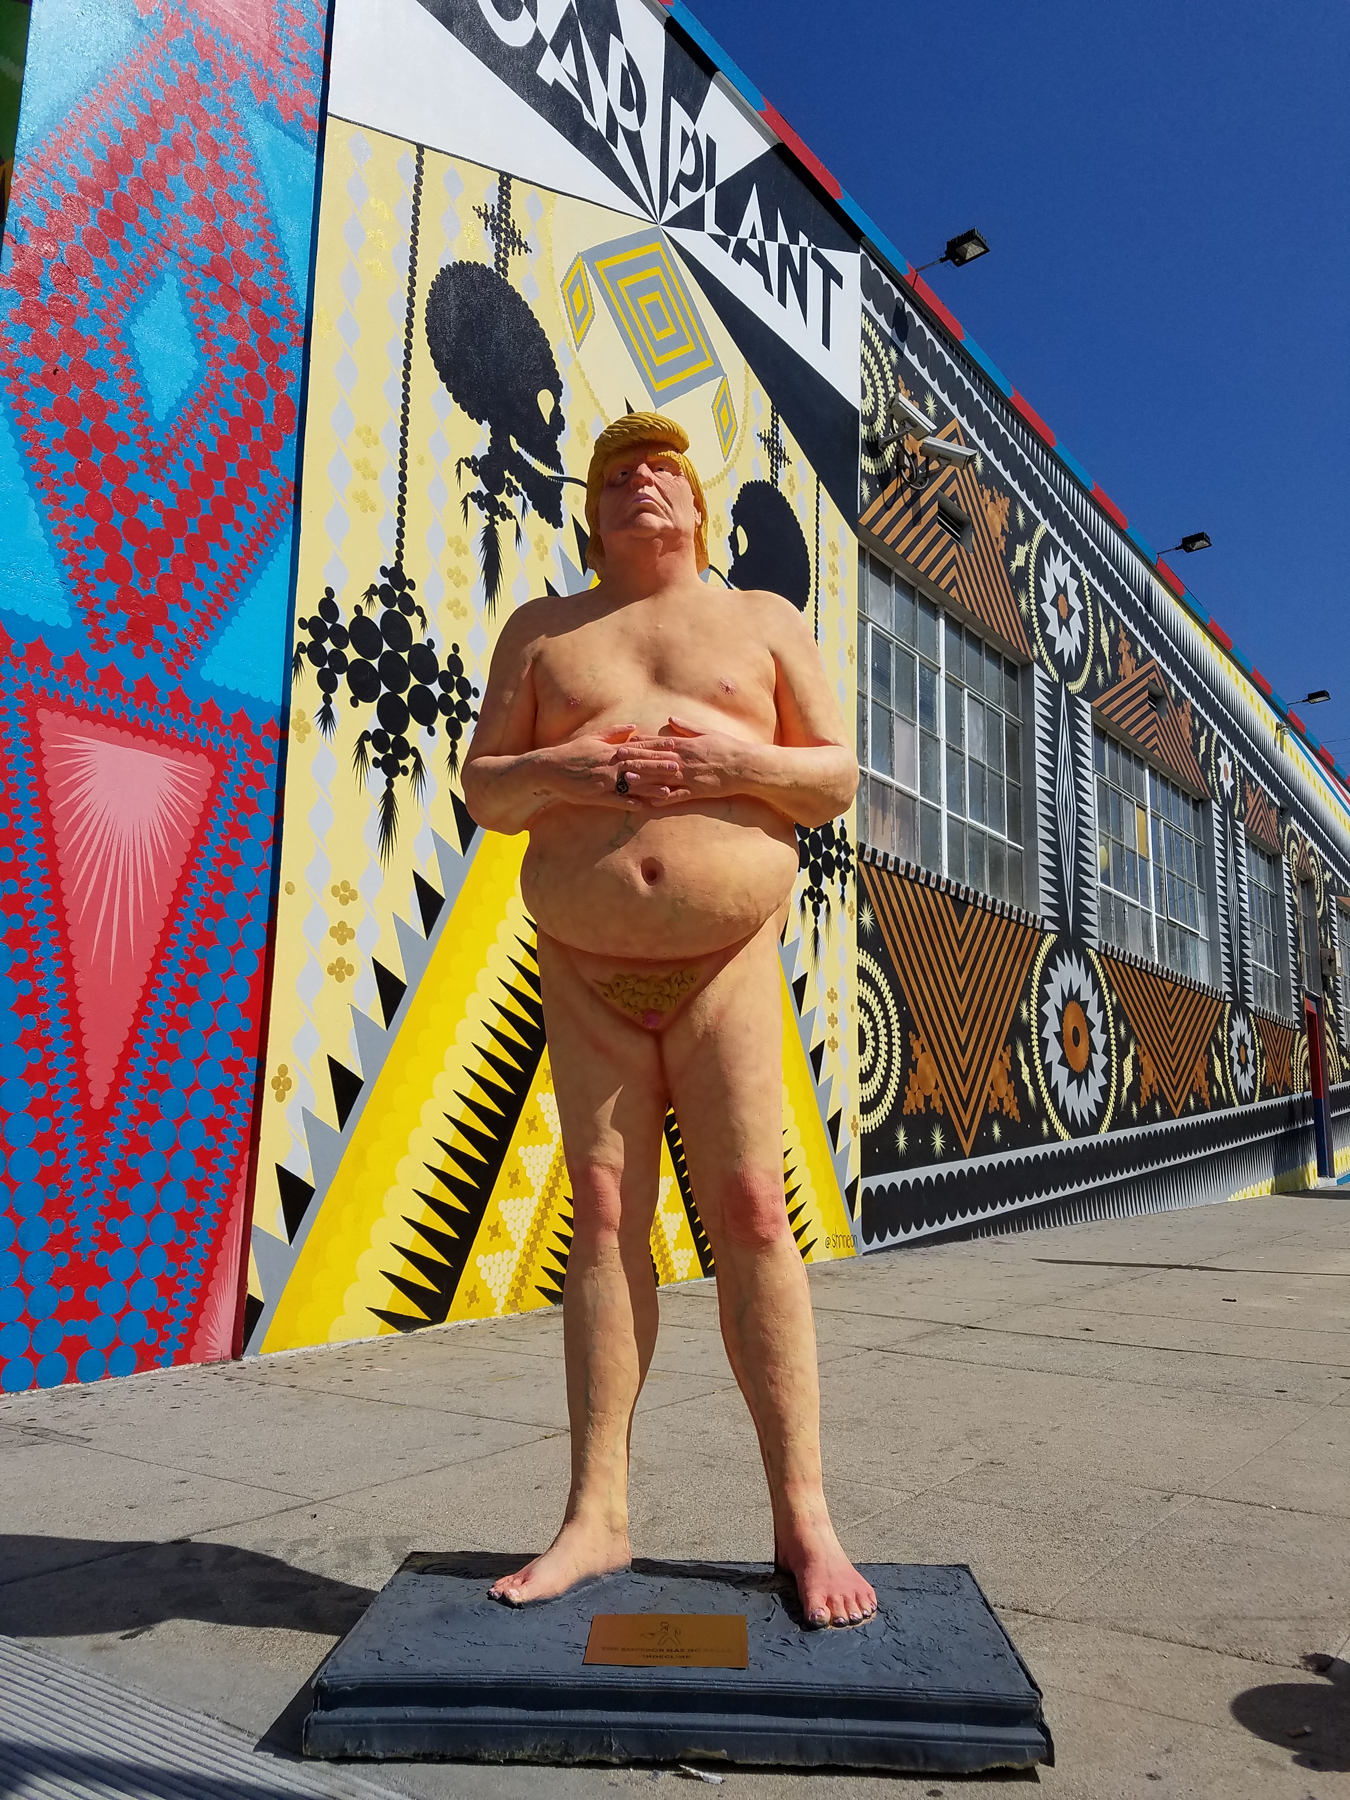 dennis granato recommends nude pictures of trump pic